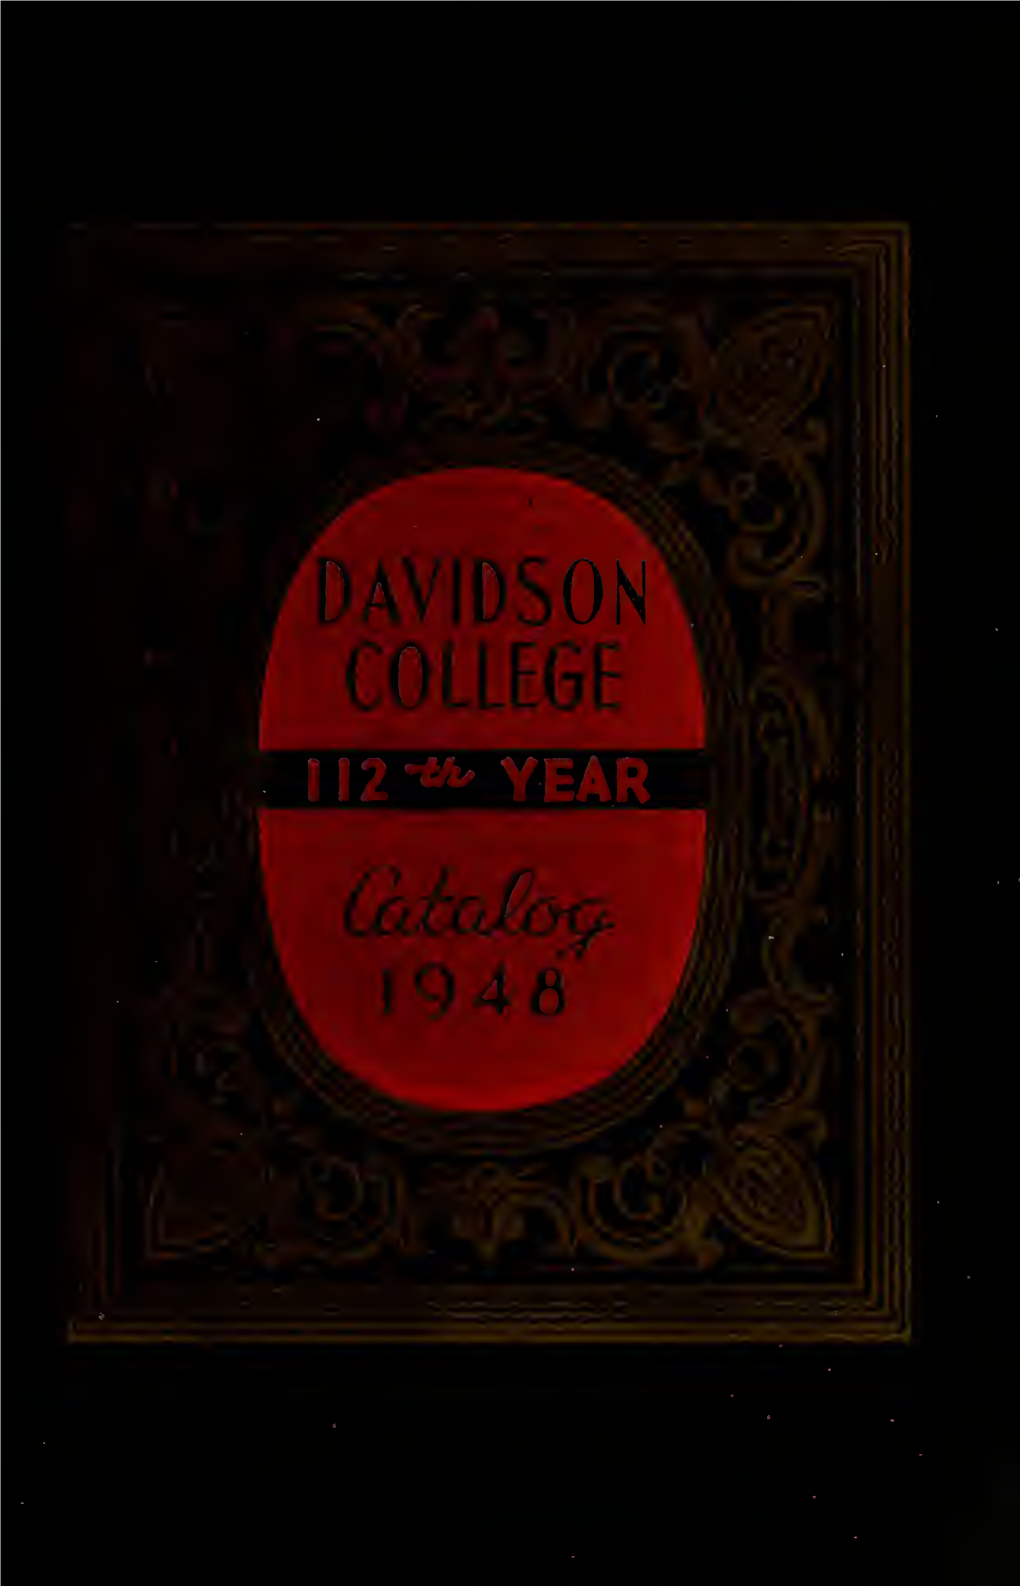 Davidson College Catalog